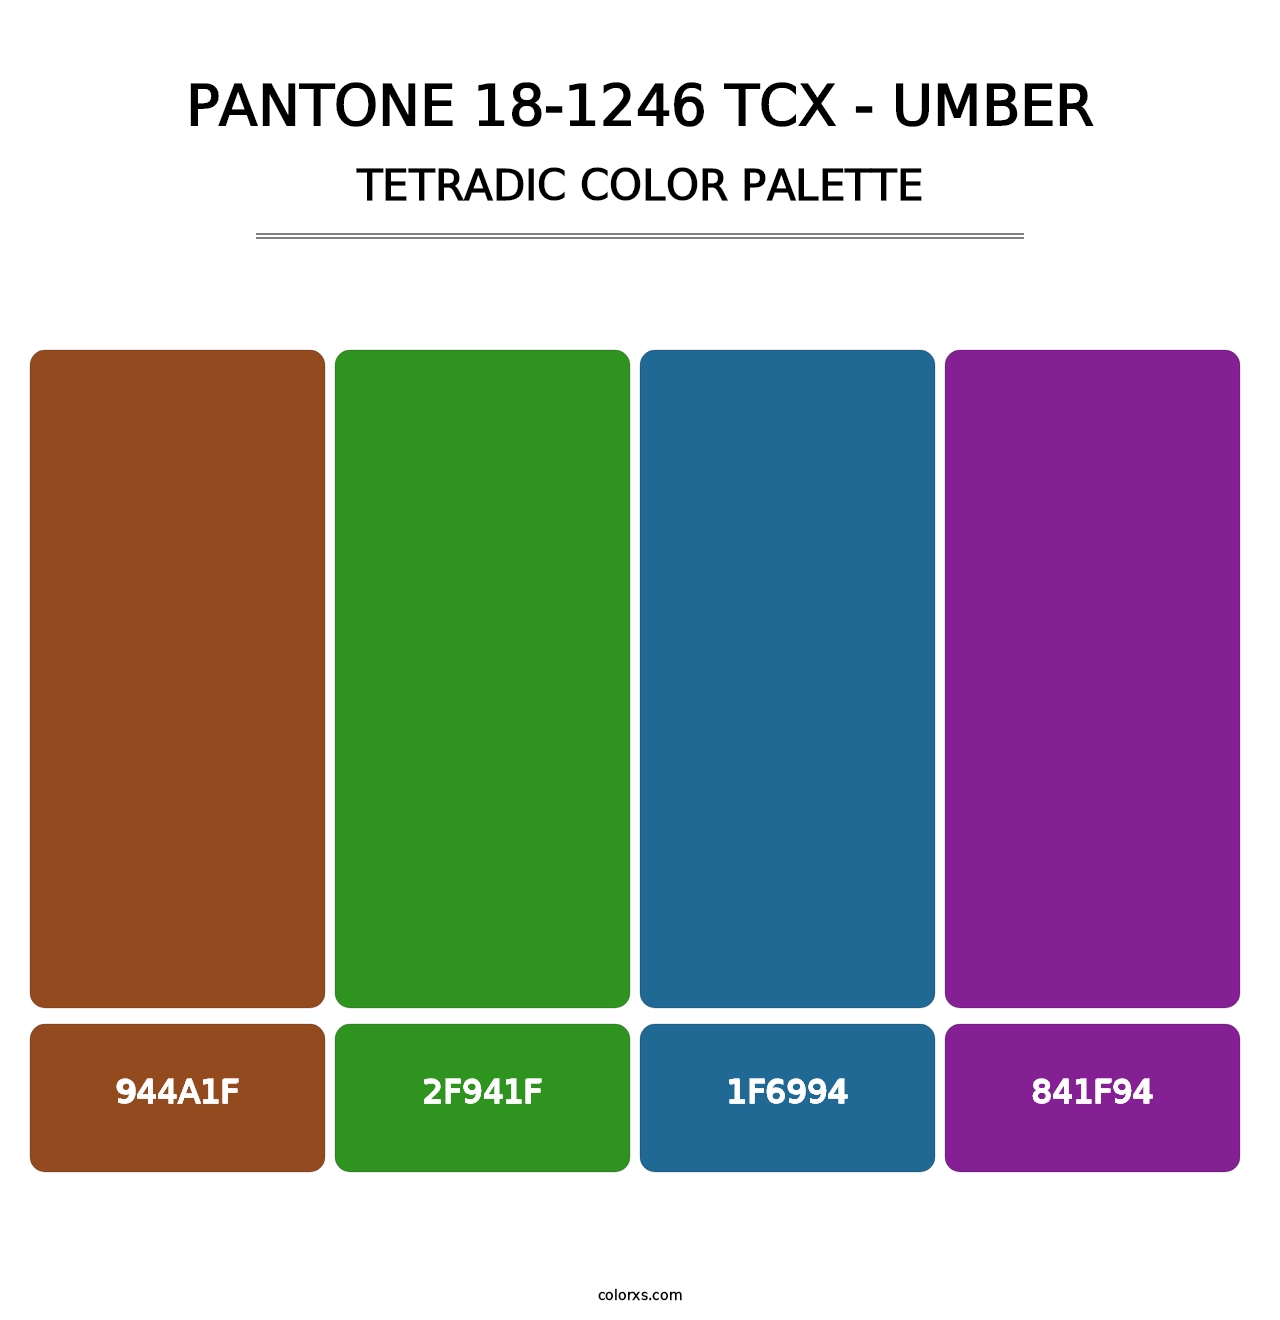 PANTONE 18-1246 TCX - Umber - Tetradic Color Palette